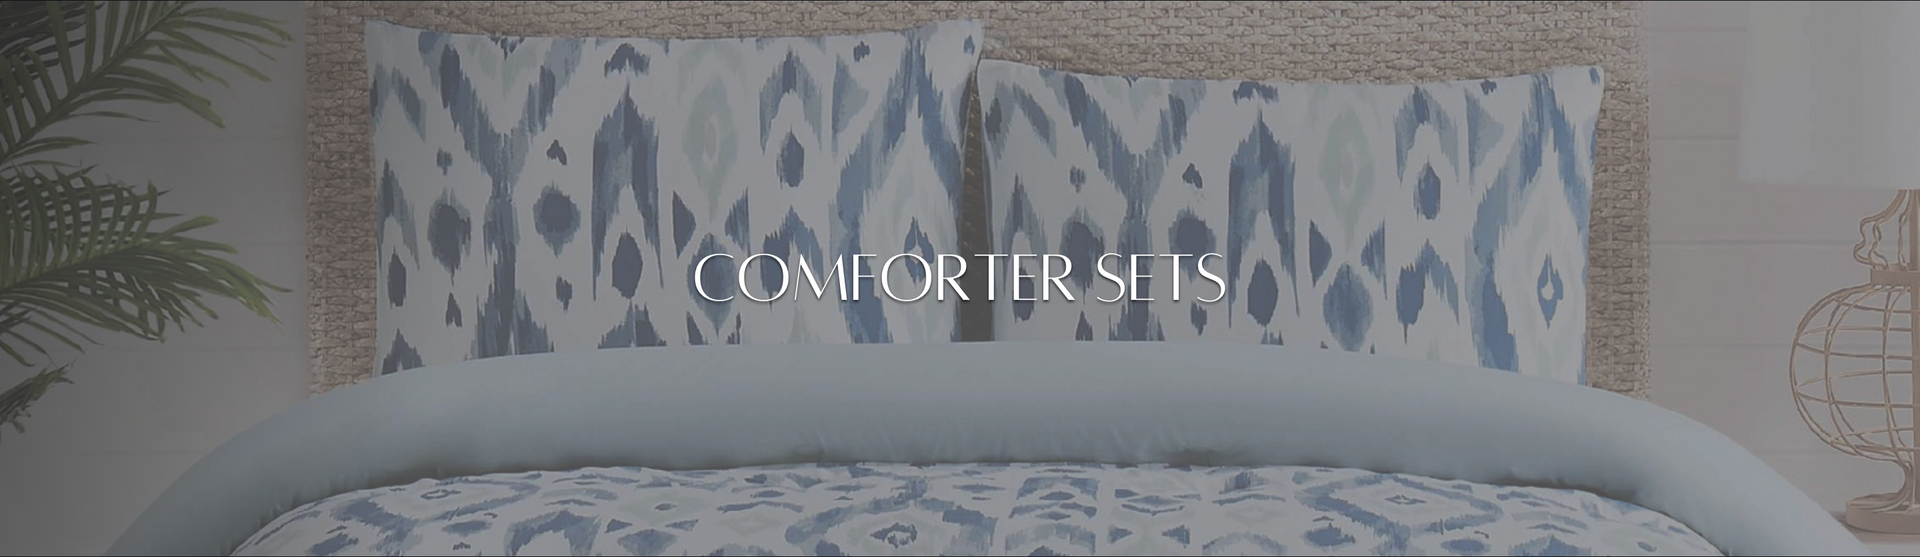 Bedding - Bedding Accessories - Comforter Sets